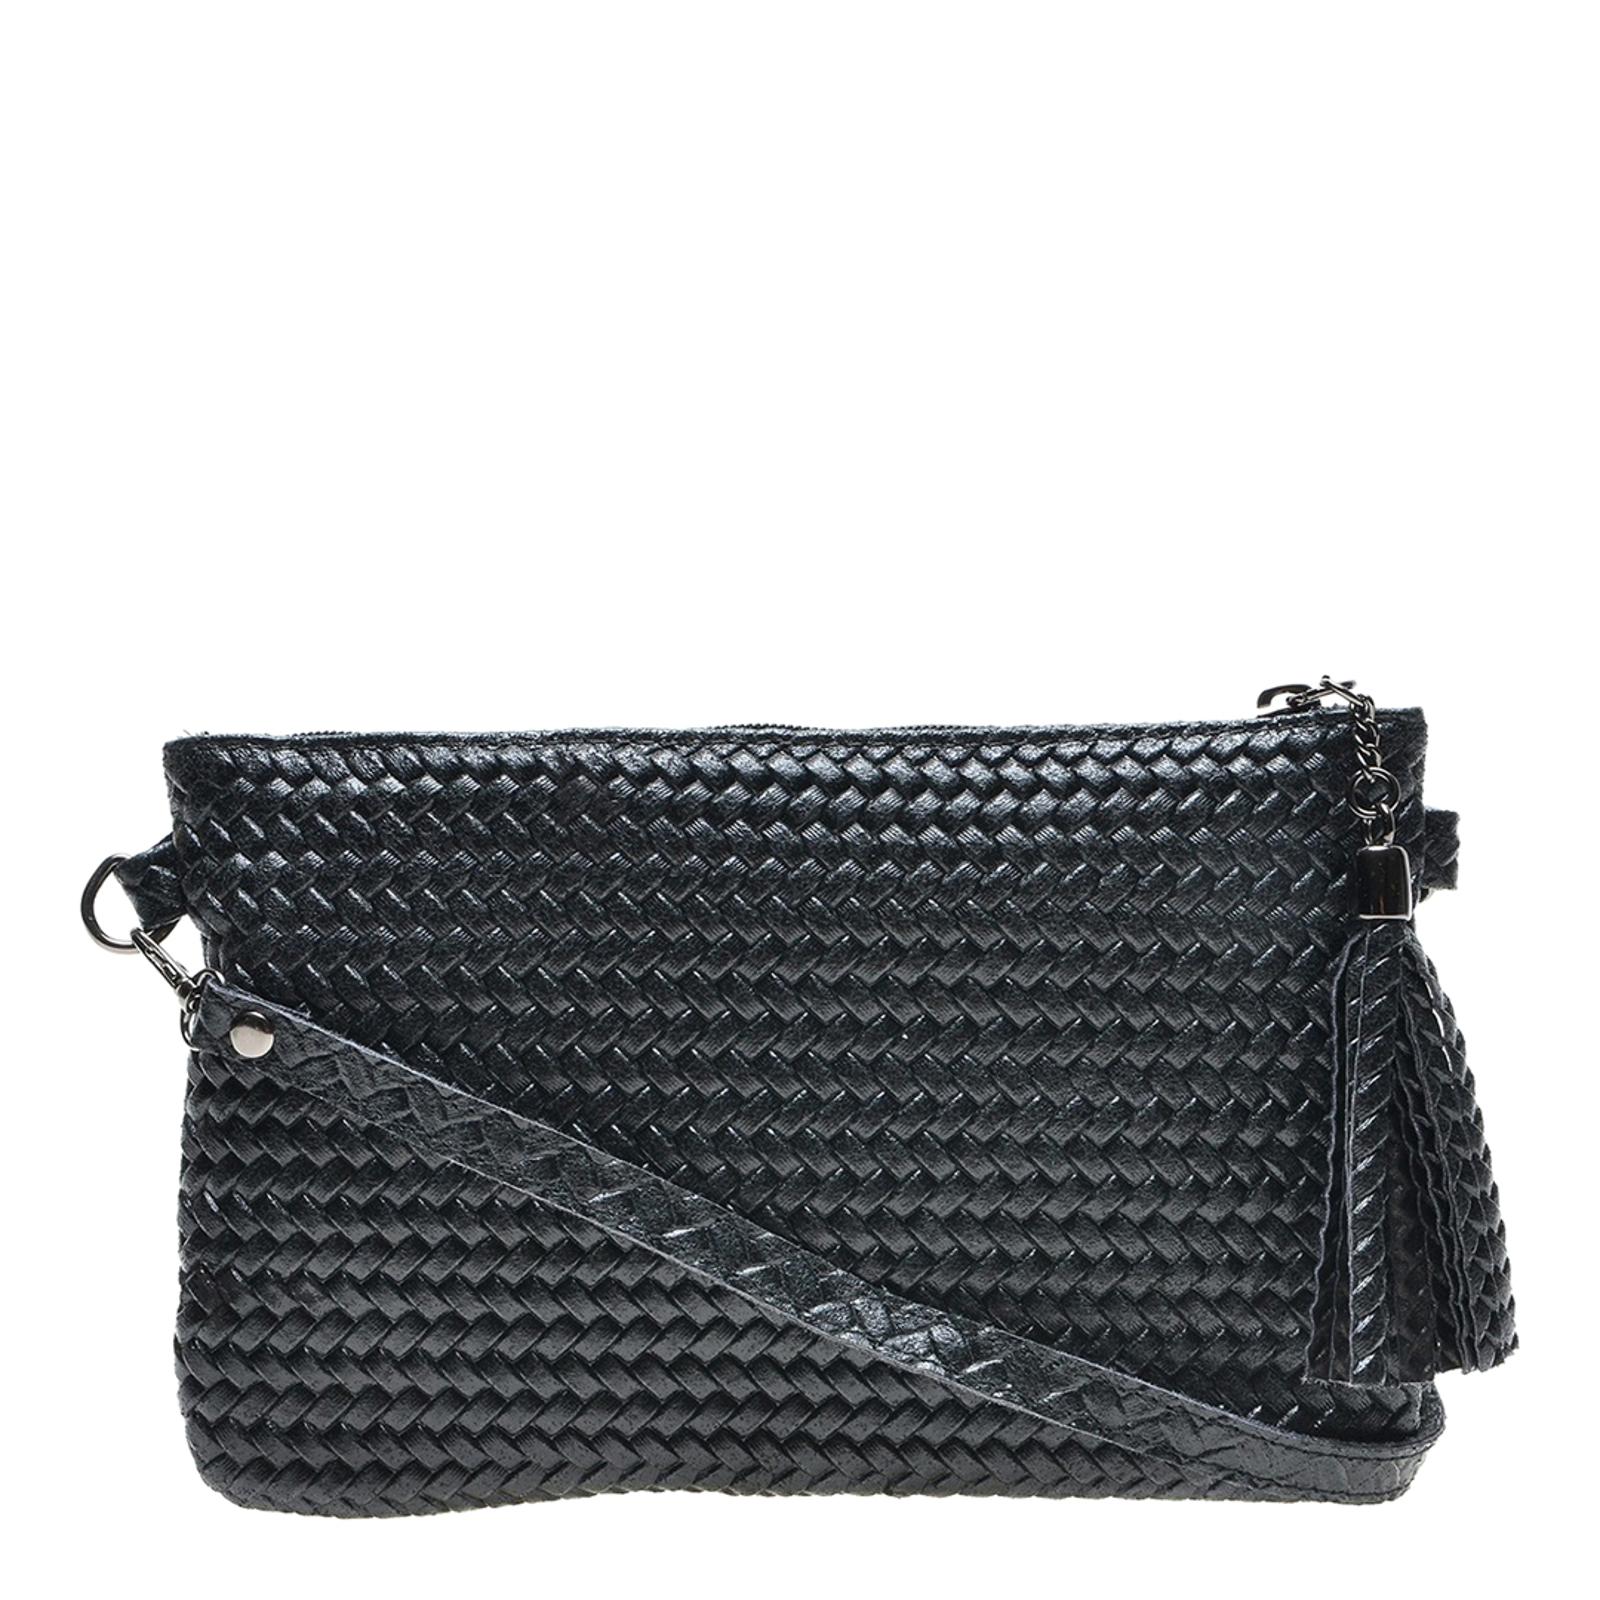 Black Leather Top Zip Closure Shoulder Bag - BrandAlley